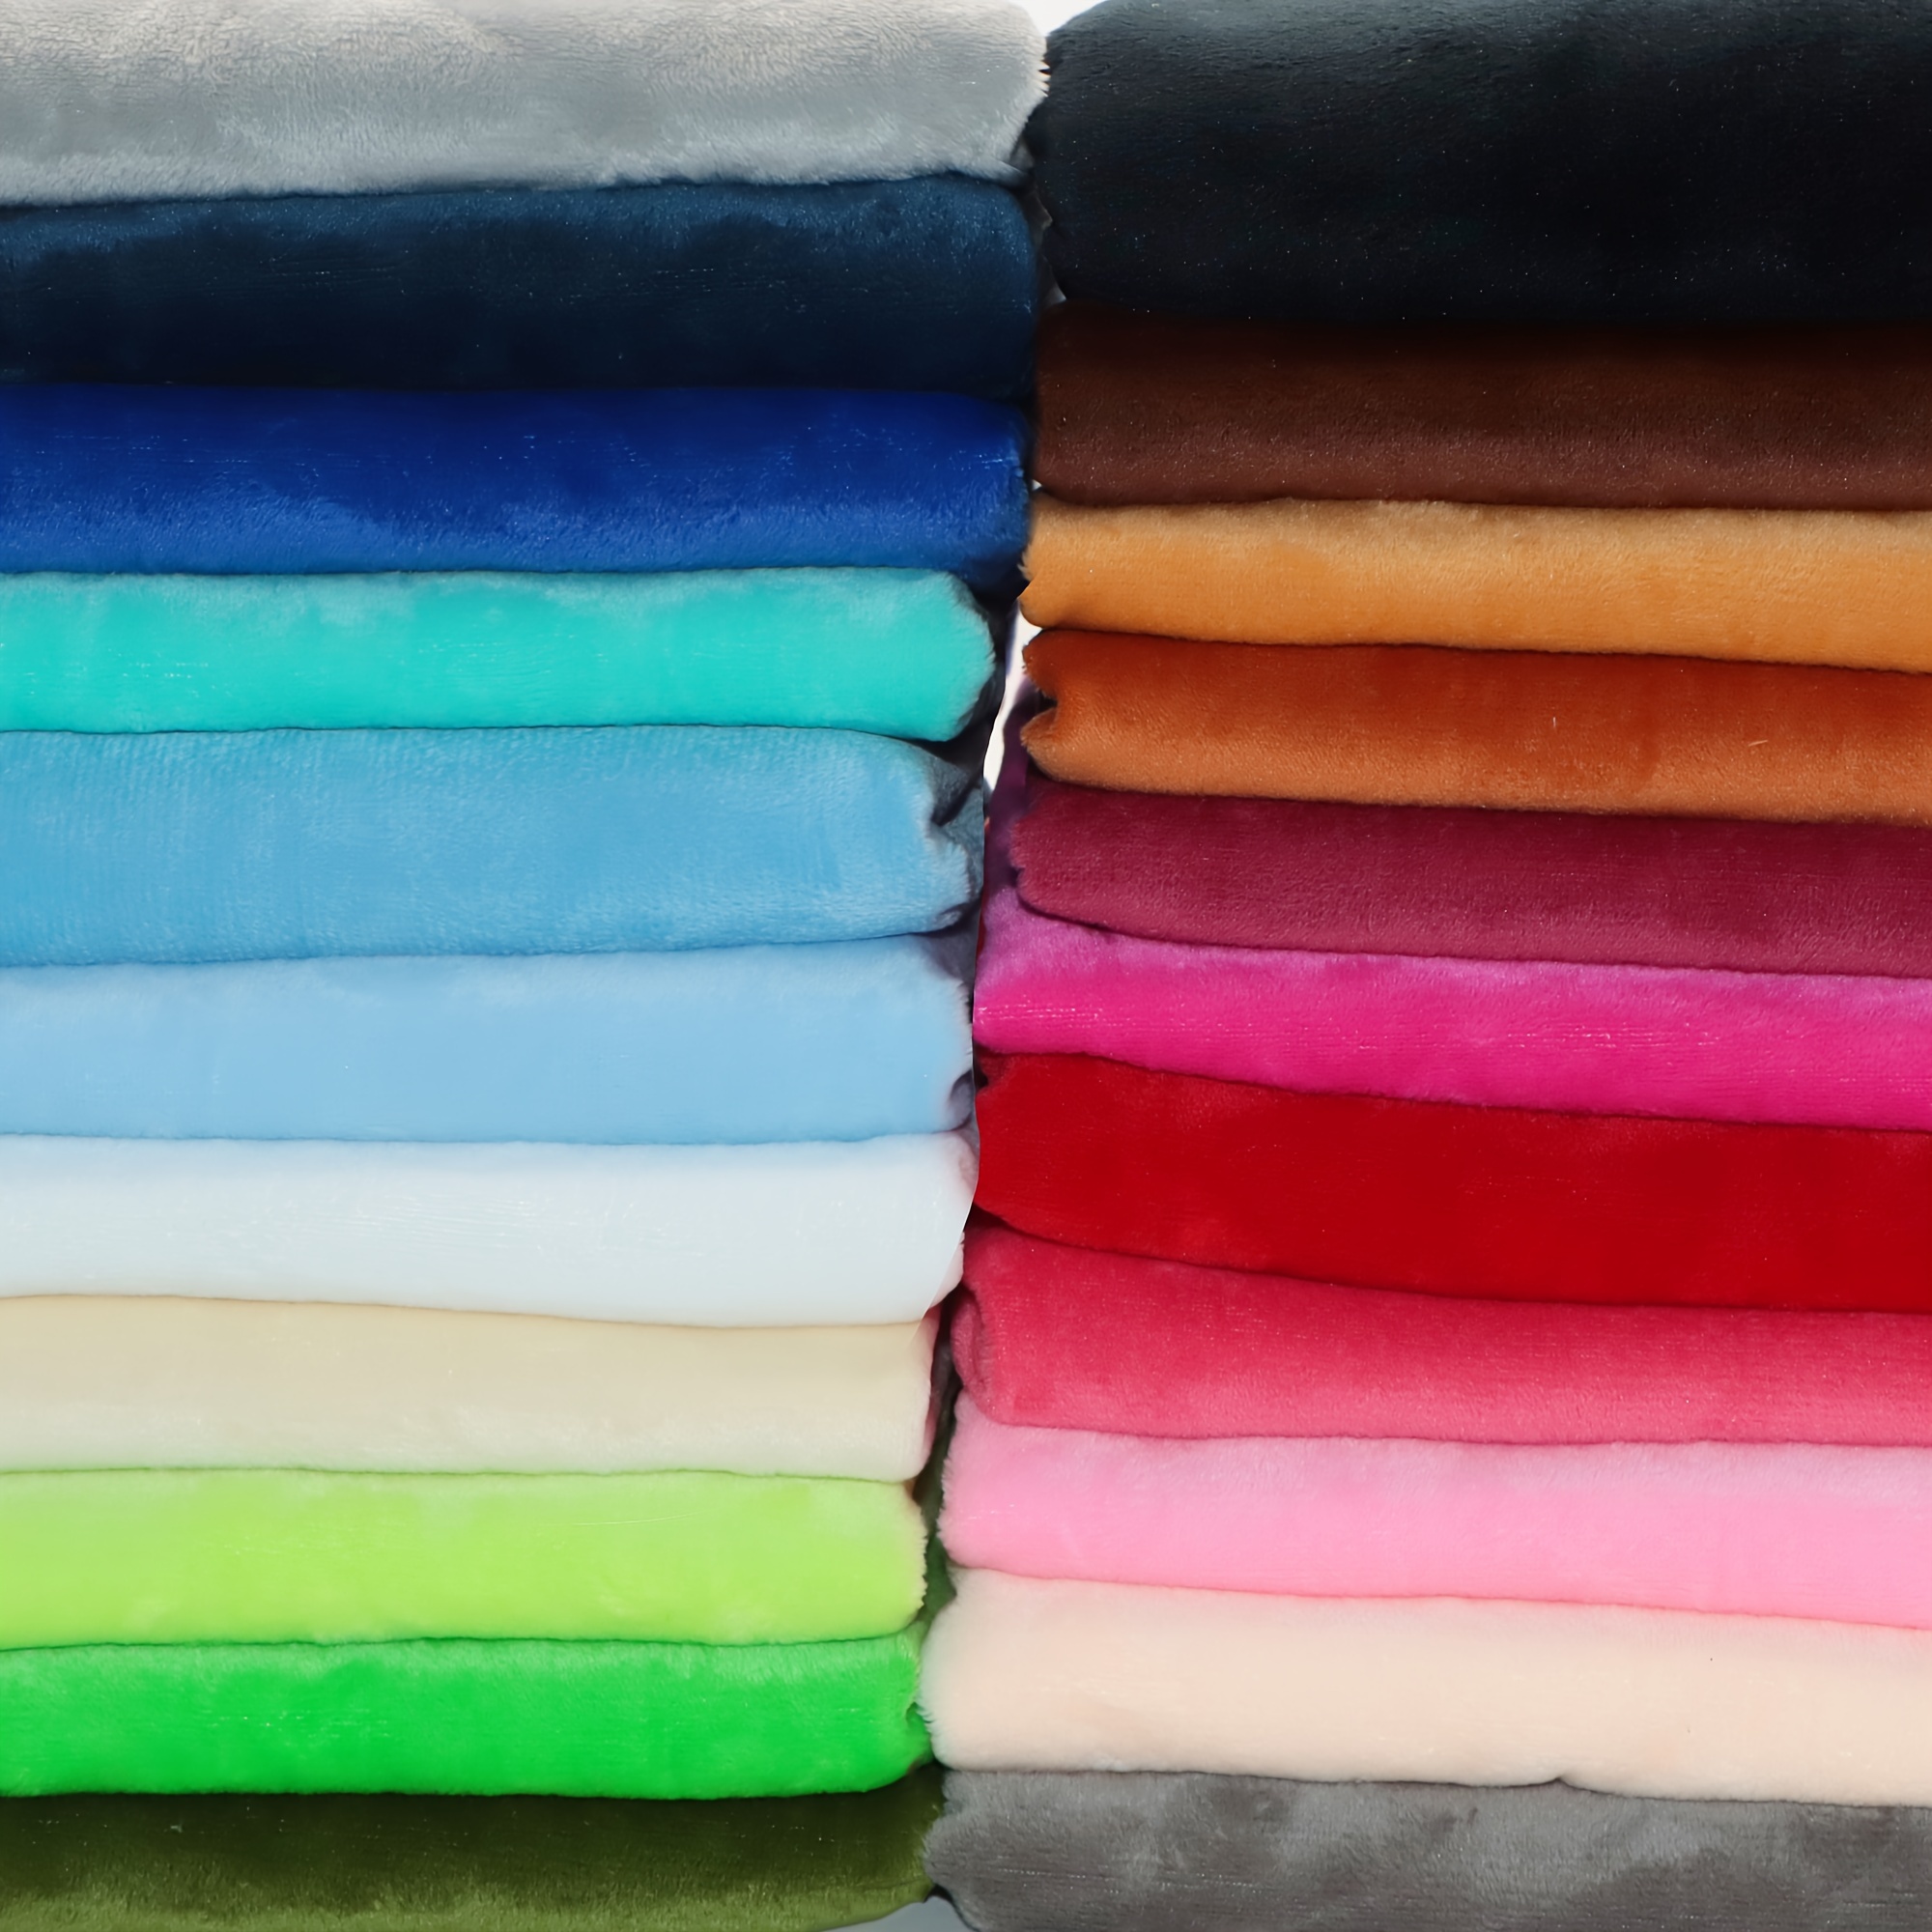 Black Korean Velvet Fabric Solid Color Stretch Fabric Garment Non